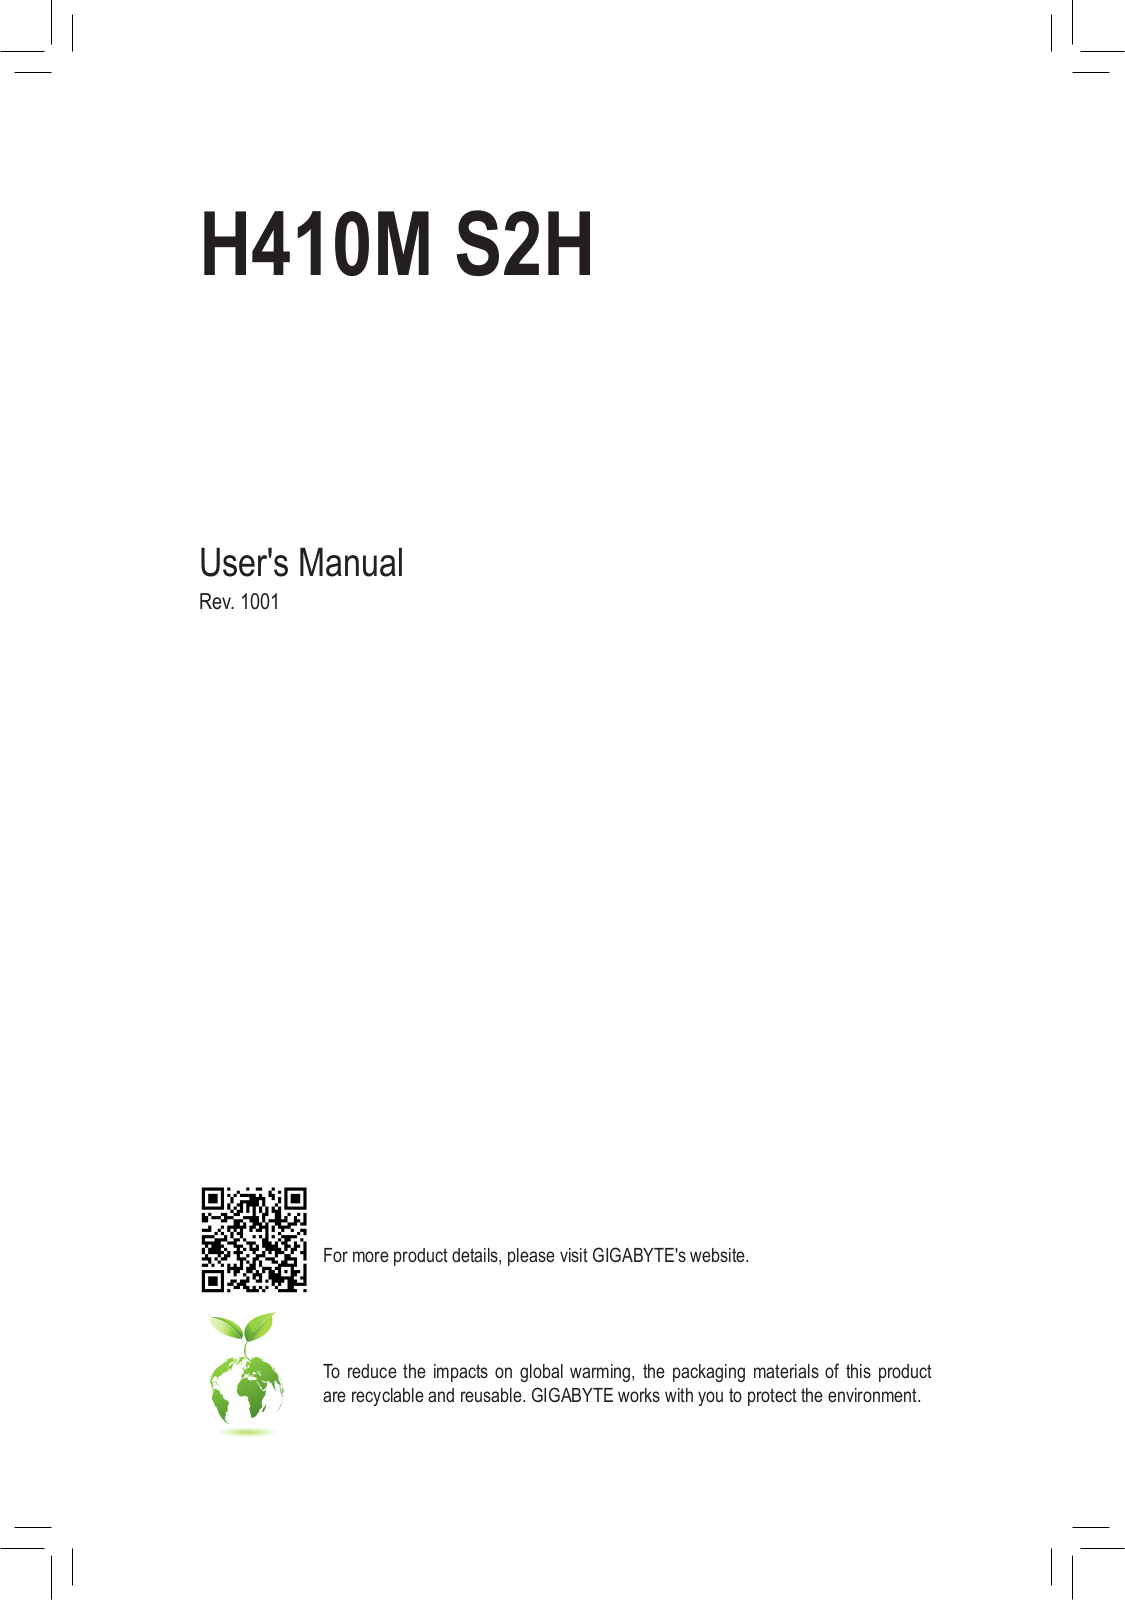 Gigabyte H410M S2H operation manual